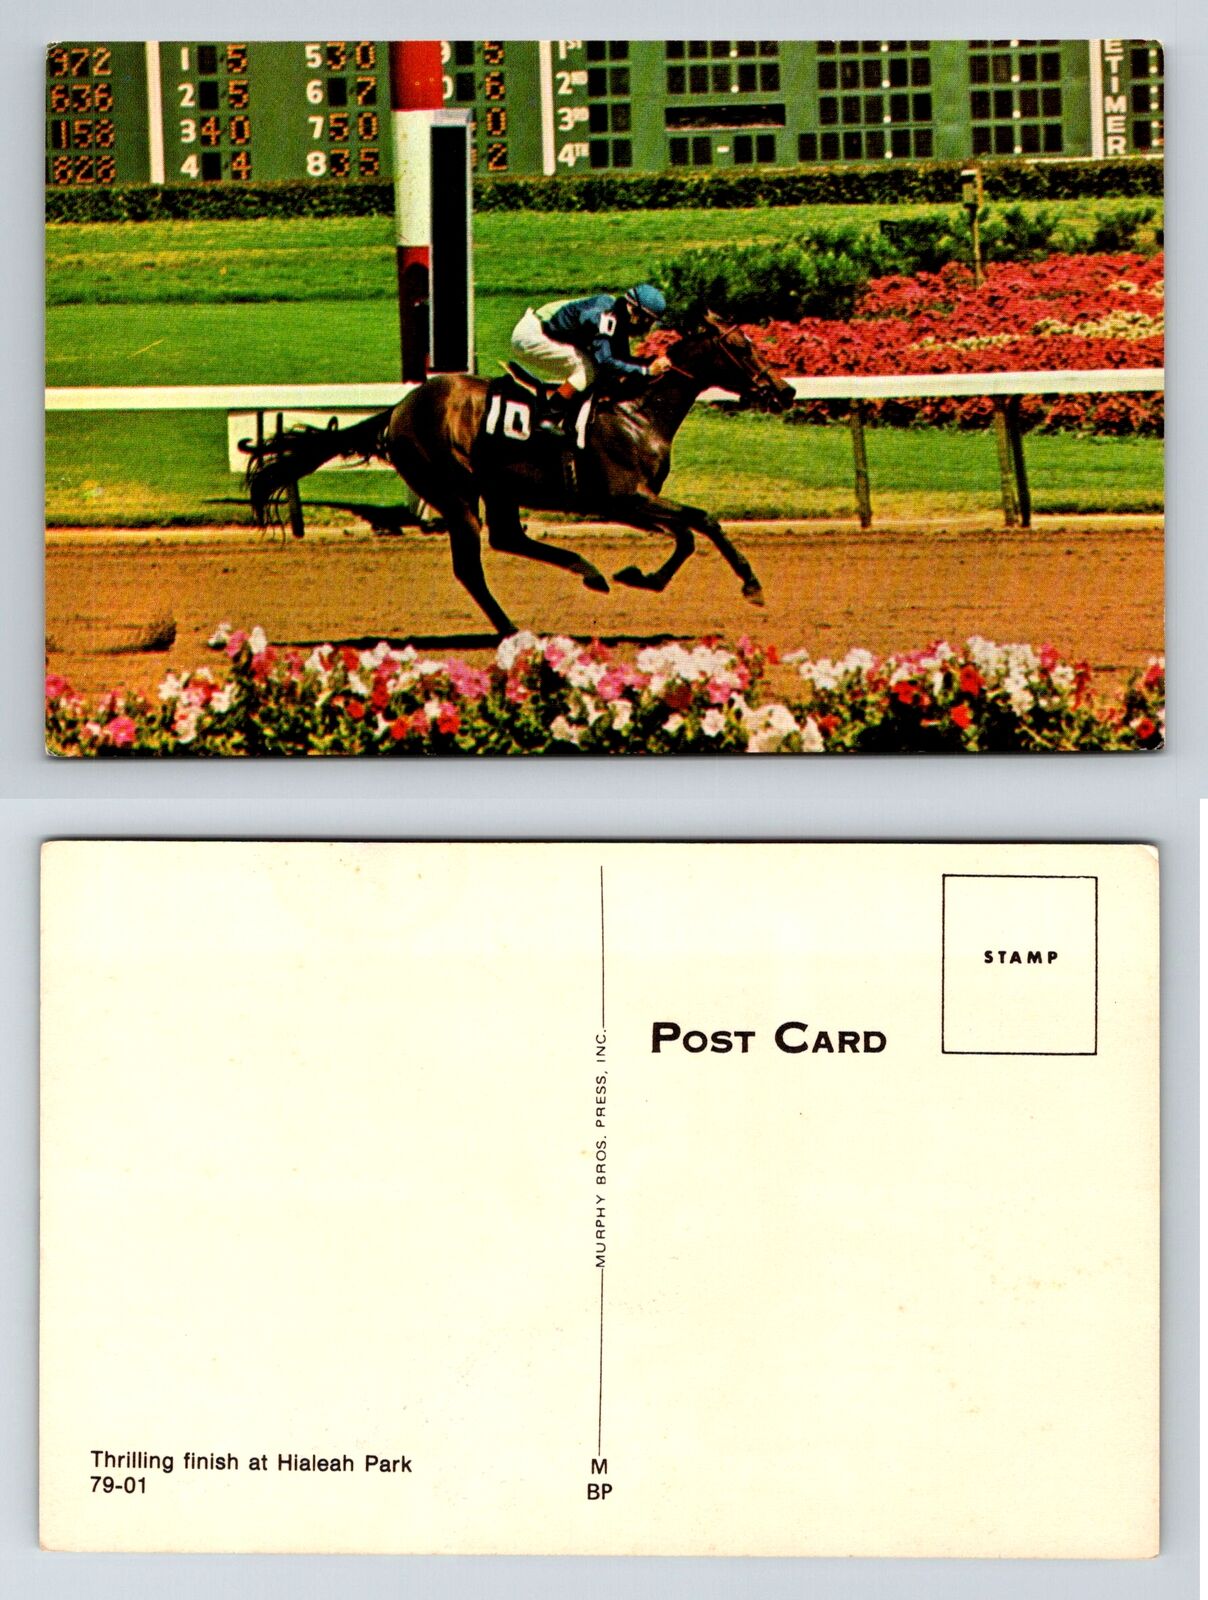 Thrilling Horse Race Finish Hialeah Park FL Postcard 1970s Chrome Murphy Bros